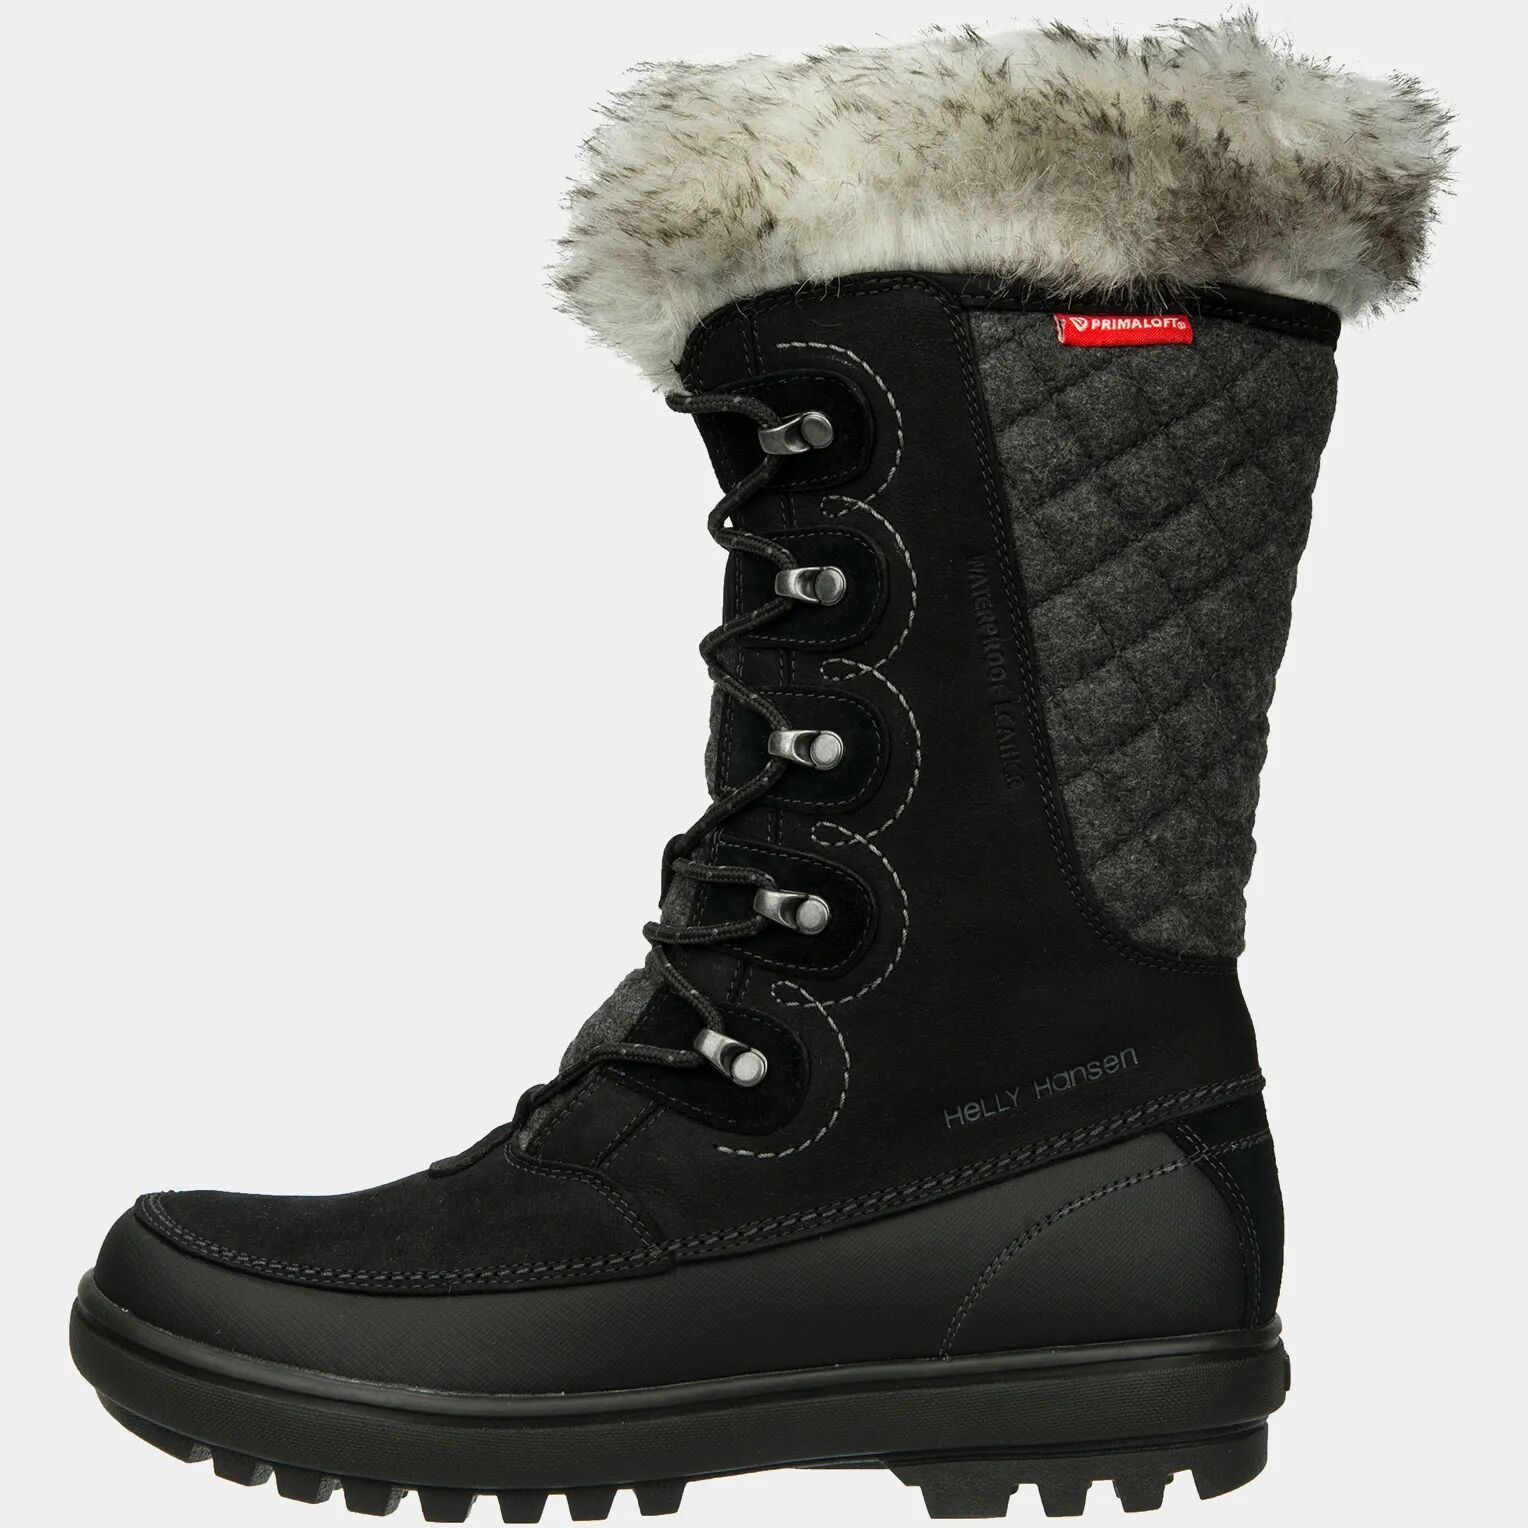 Helly Hansen Women's Garibaldi VL Snow Boots Black 5.5 - Jet Black - Female